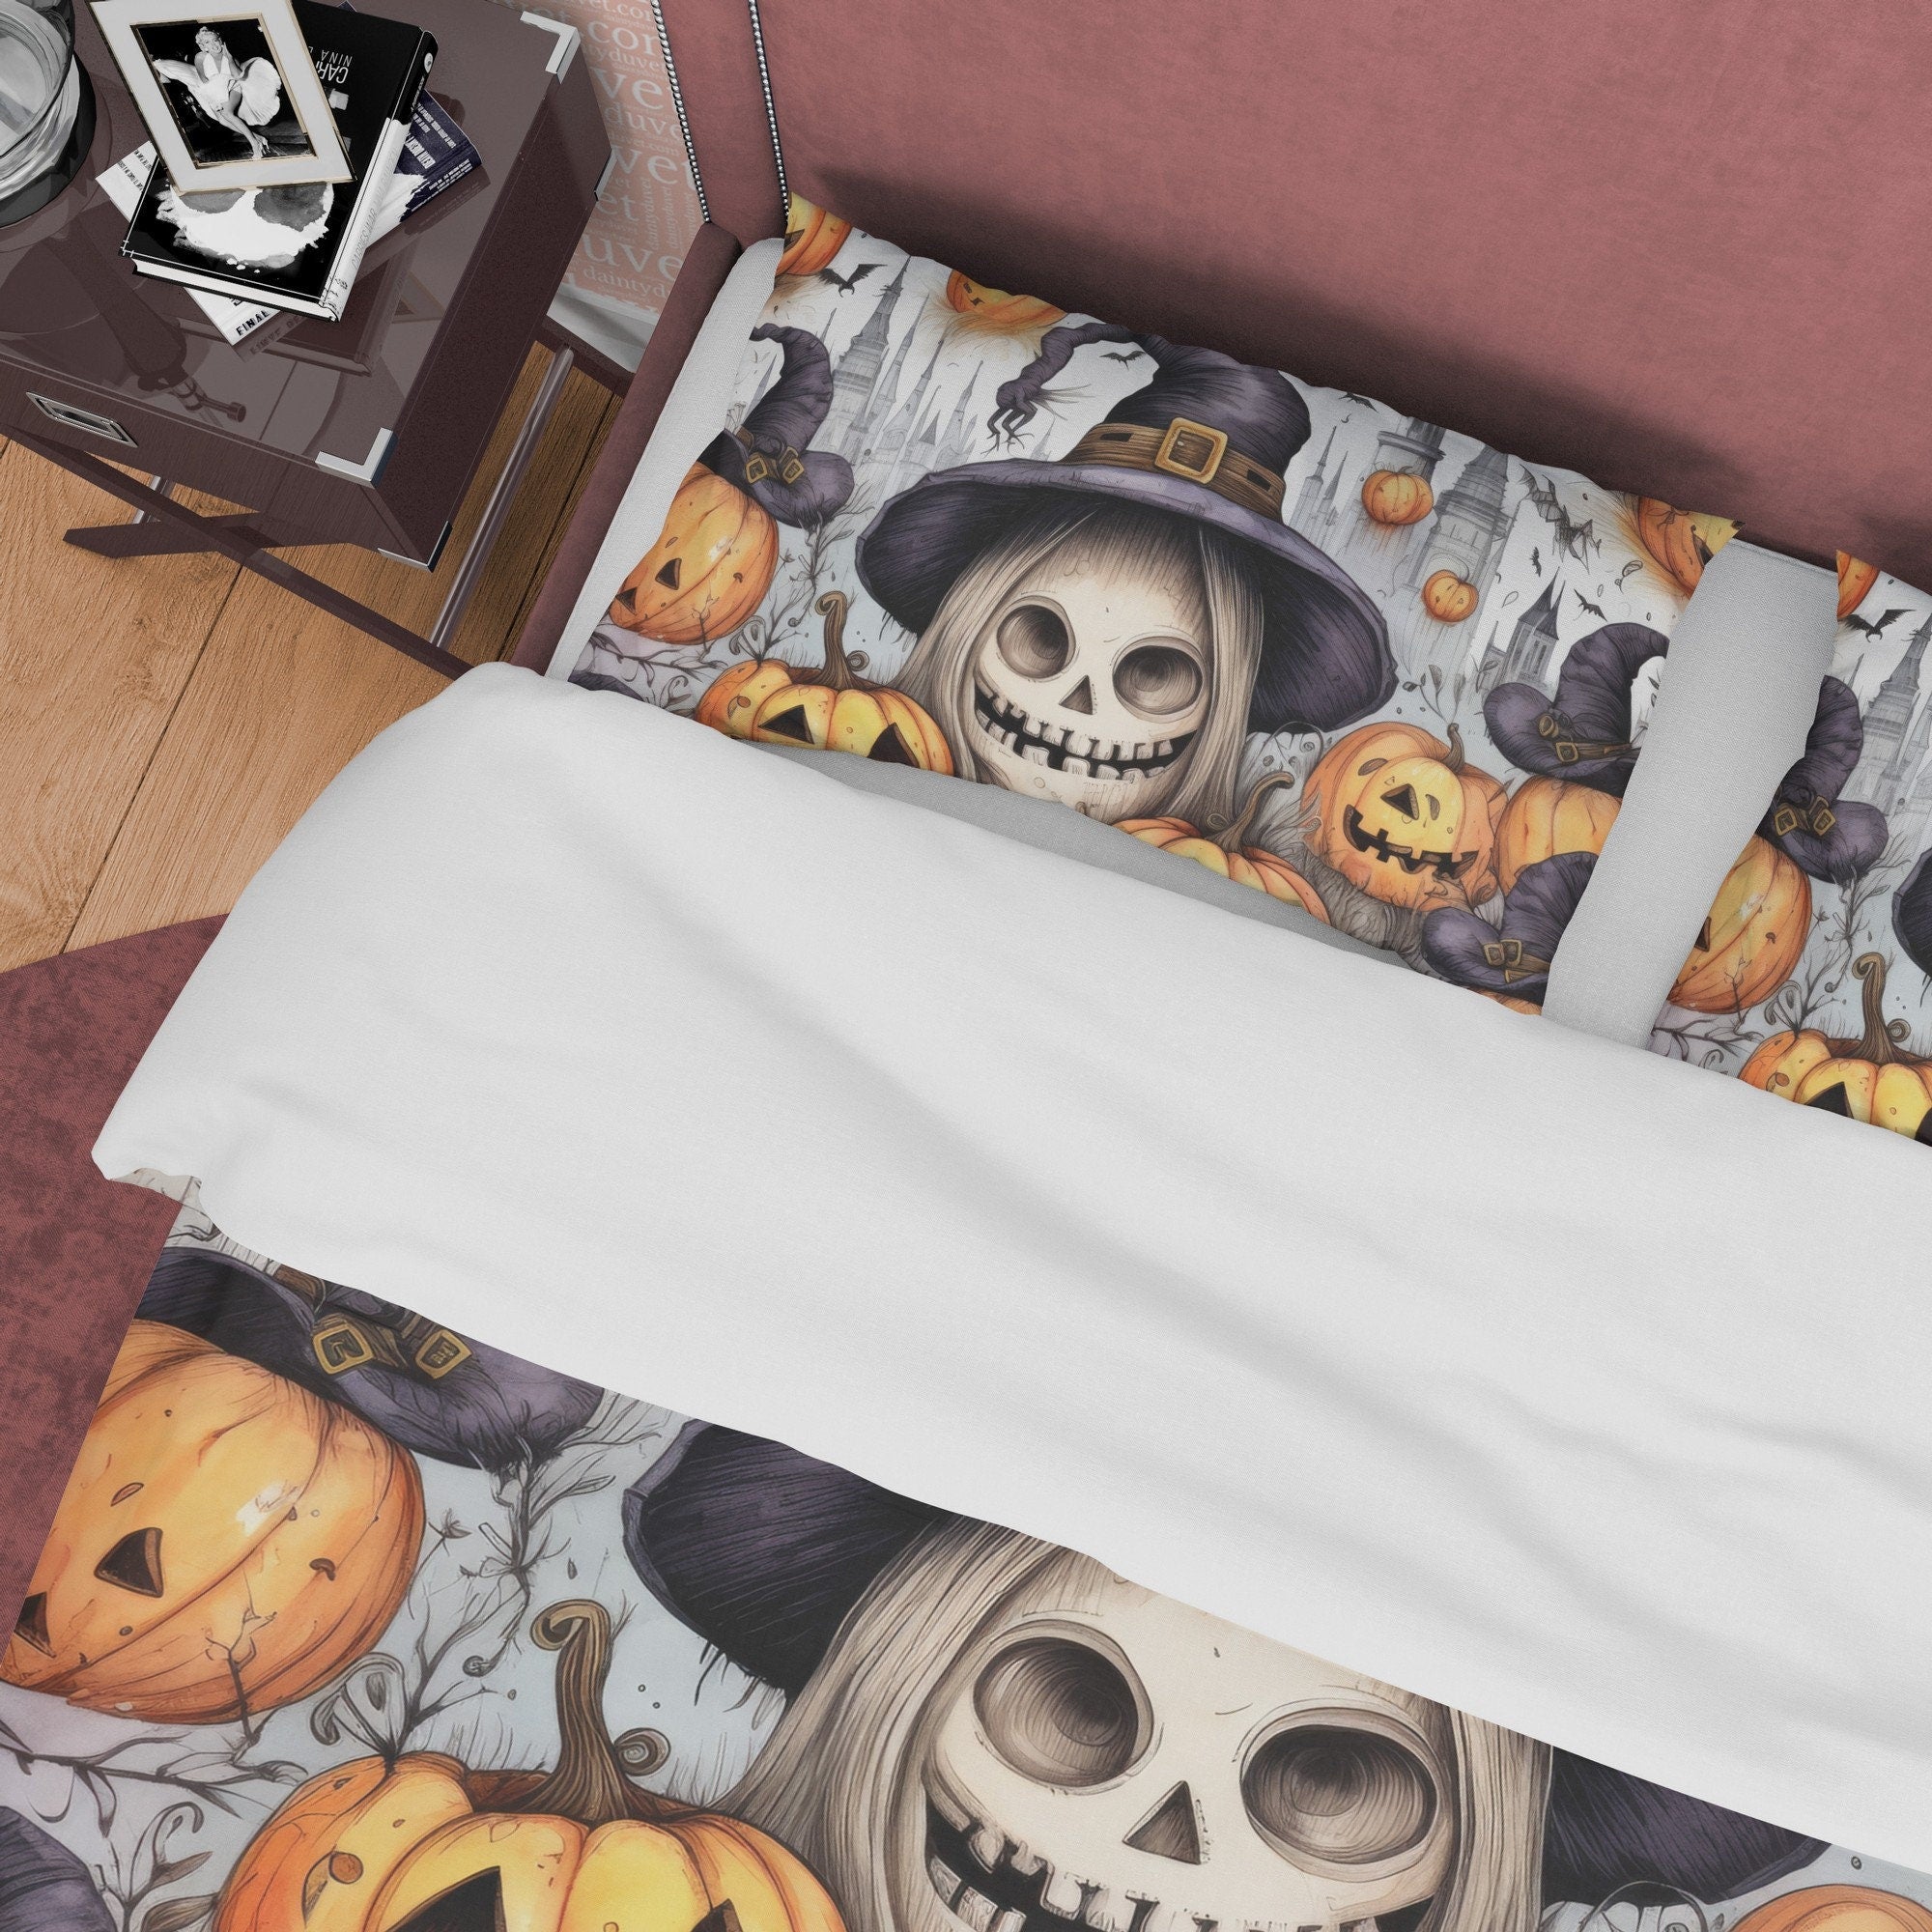 Witch Skull & Pumpkin Duvet Cover Set Aesthetic Bedding, Halloween Room Decor, Zipper Quilt Cover, Autumn Bedspread, Spooky Bed Cover Retro